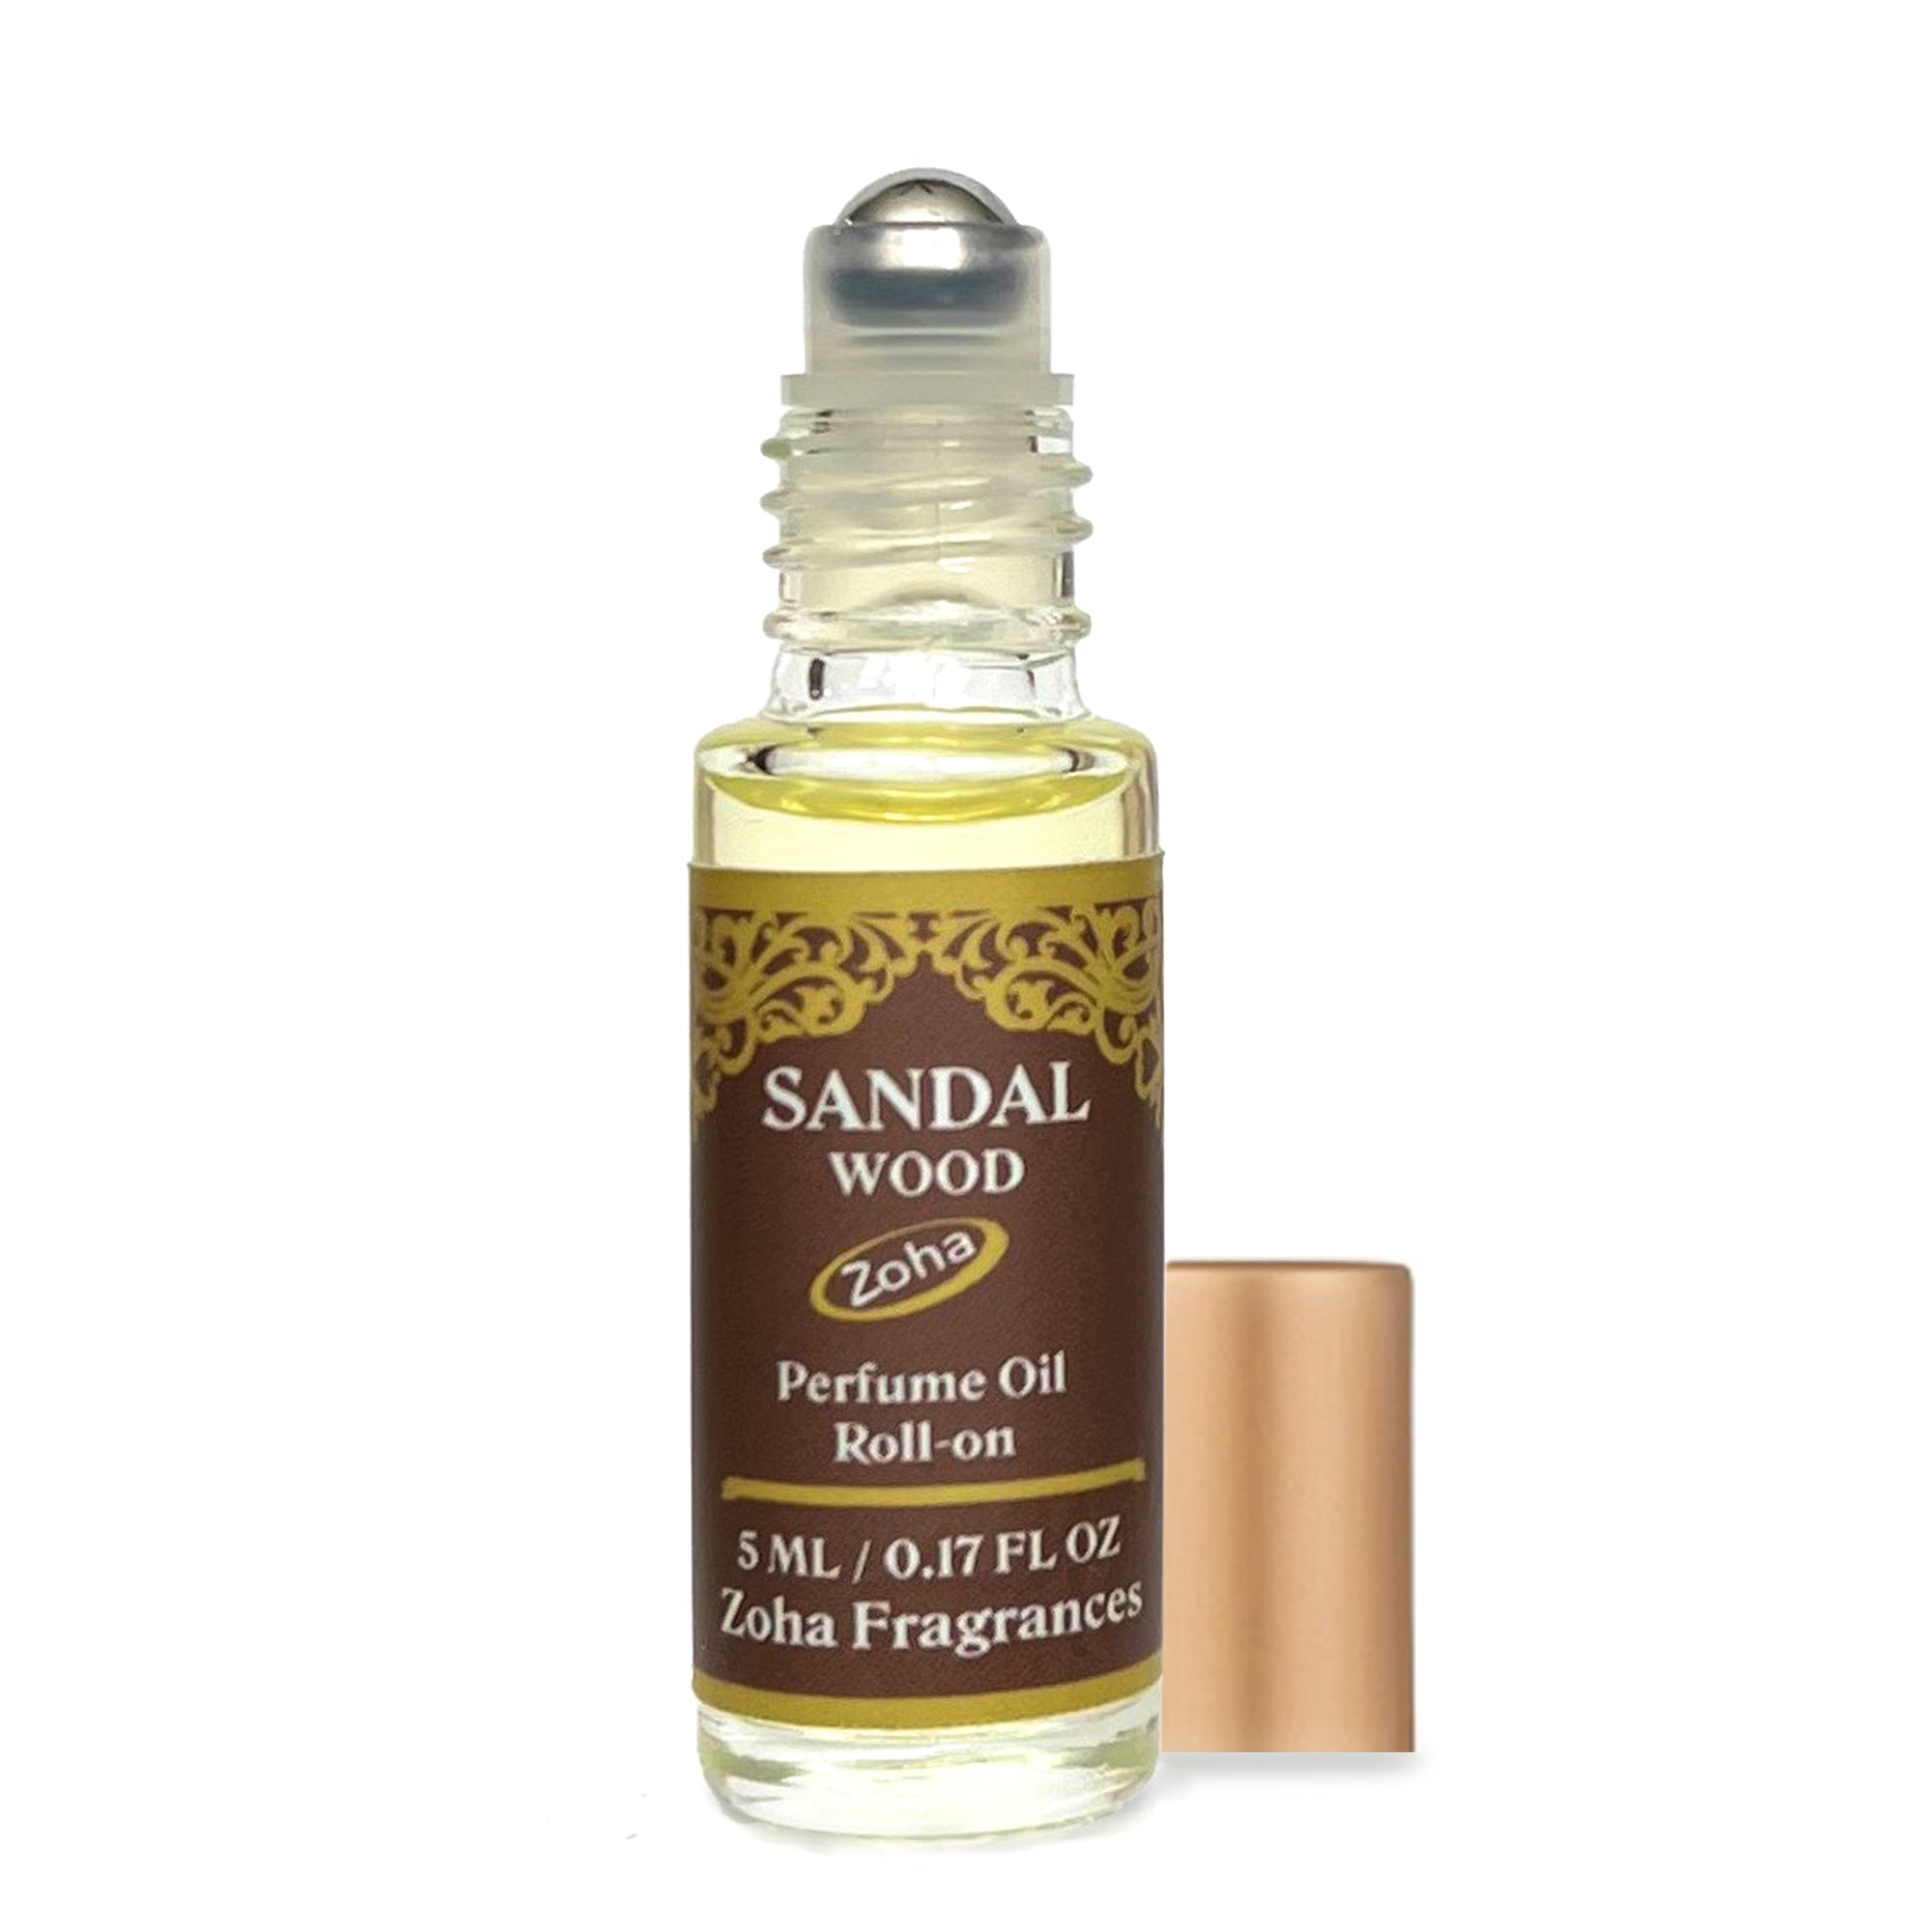 Arabian Sandalwood Perfume Oil for Perfume Making, Personal Body